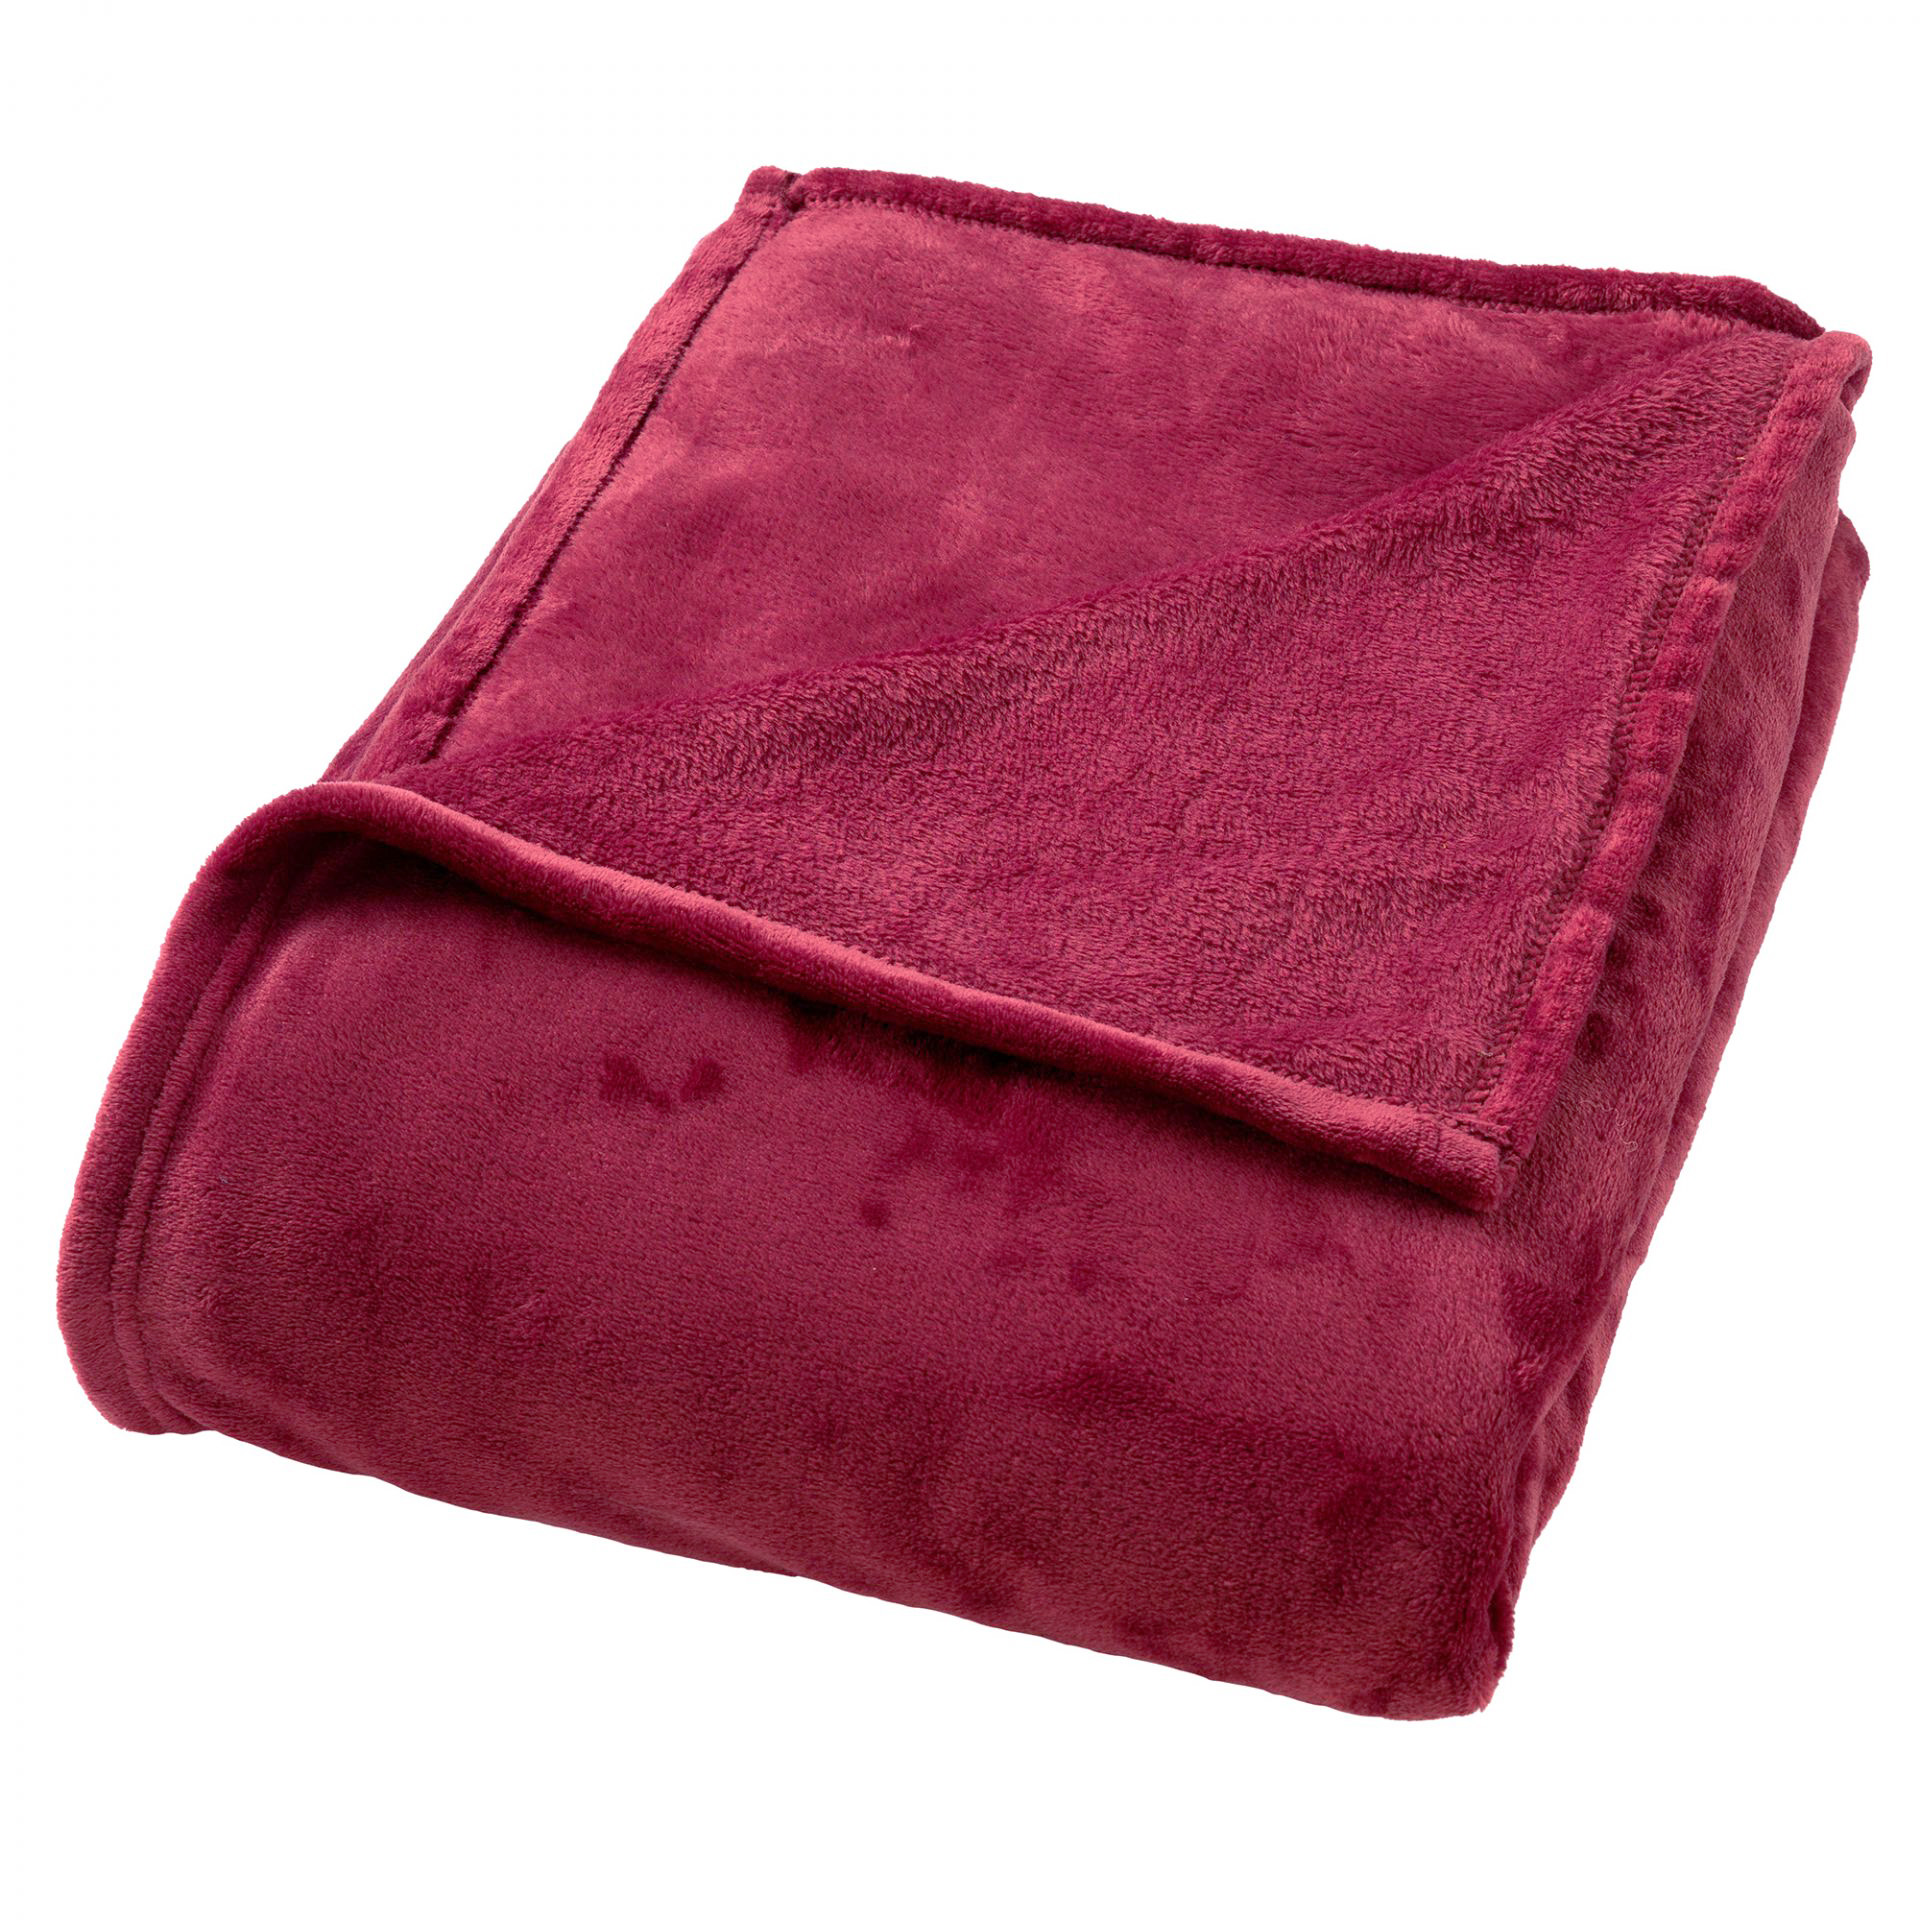 BILLY - Plaid flannel fleece 150x200 cm - Red Plum - roze - superzacht